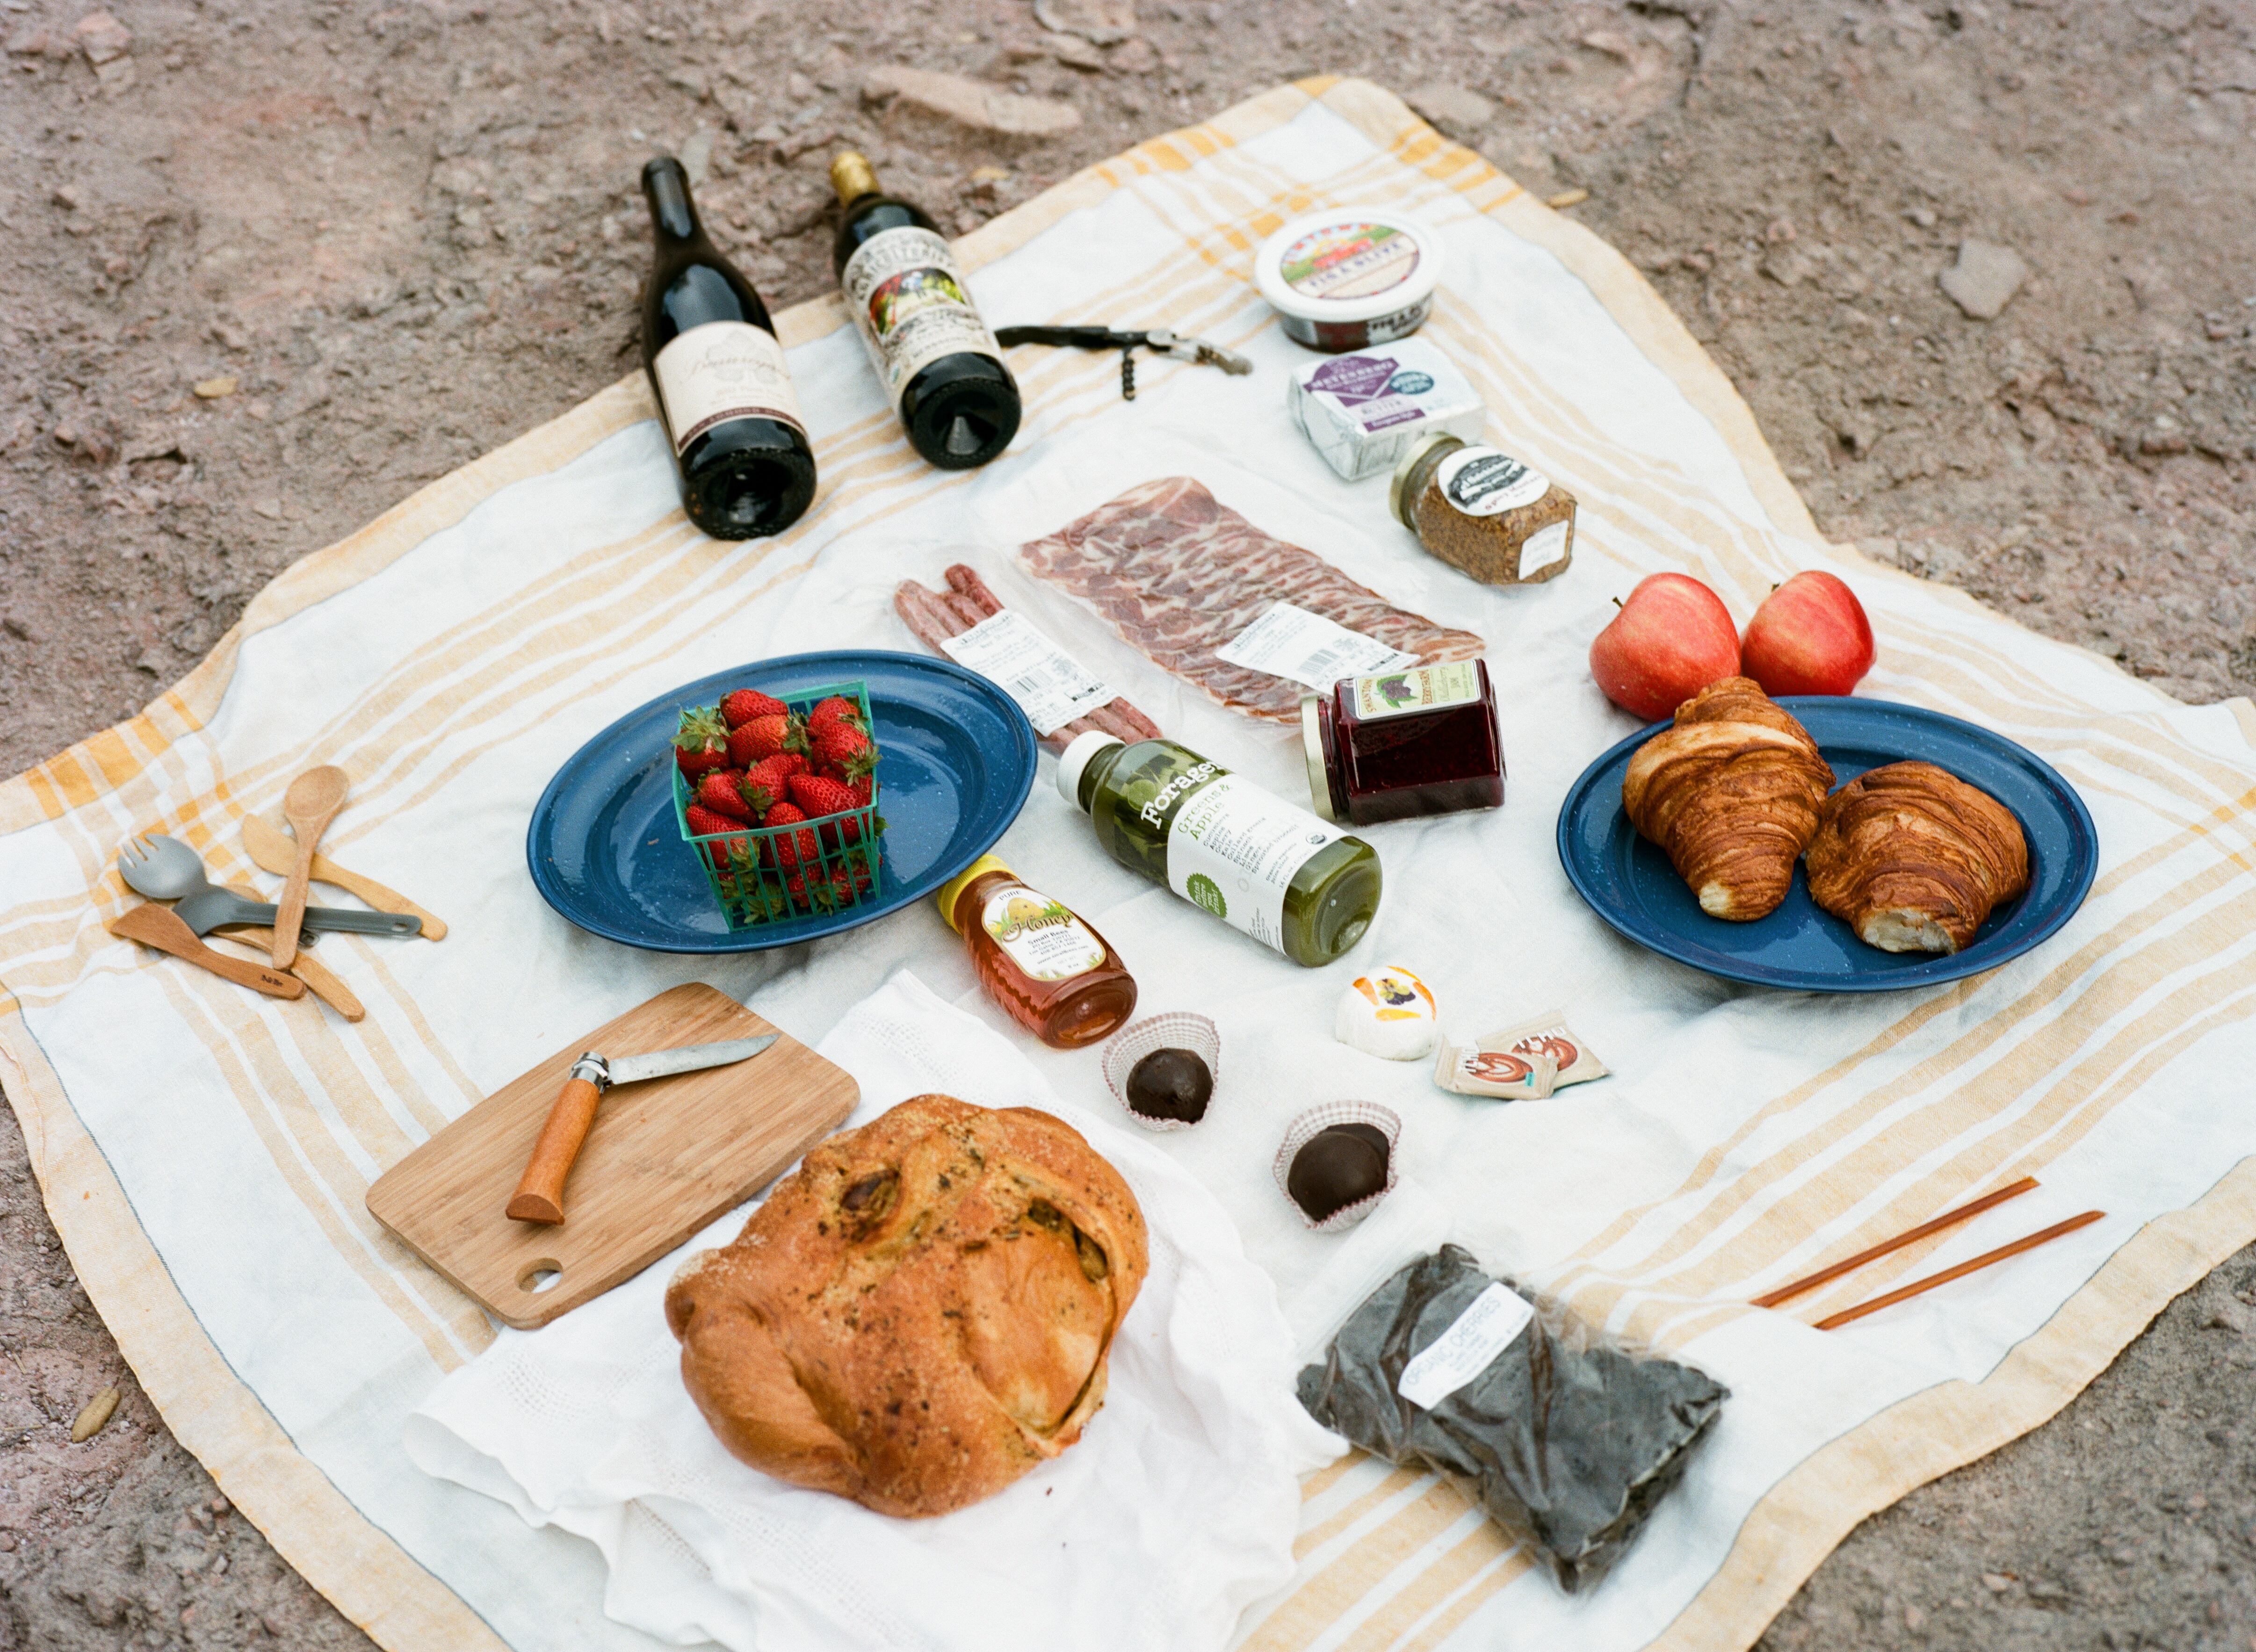 picnic food and supplies